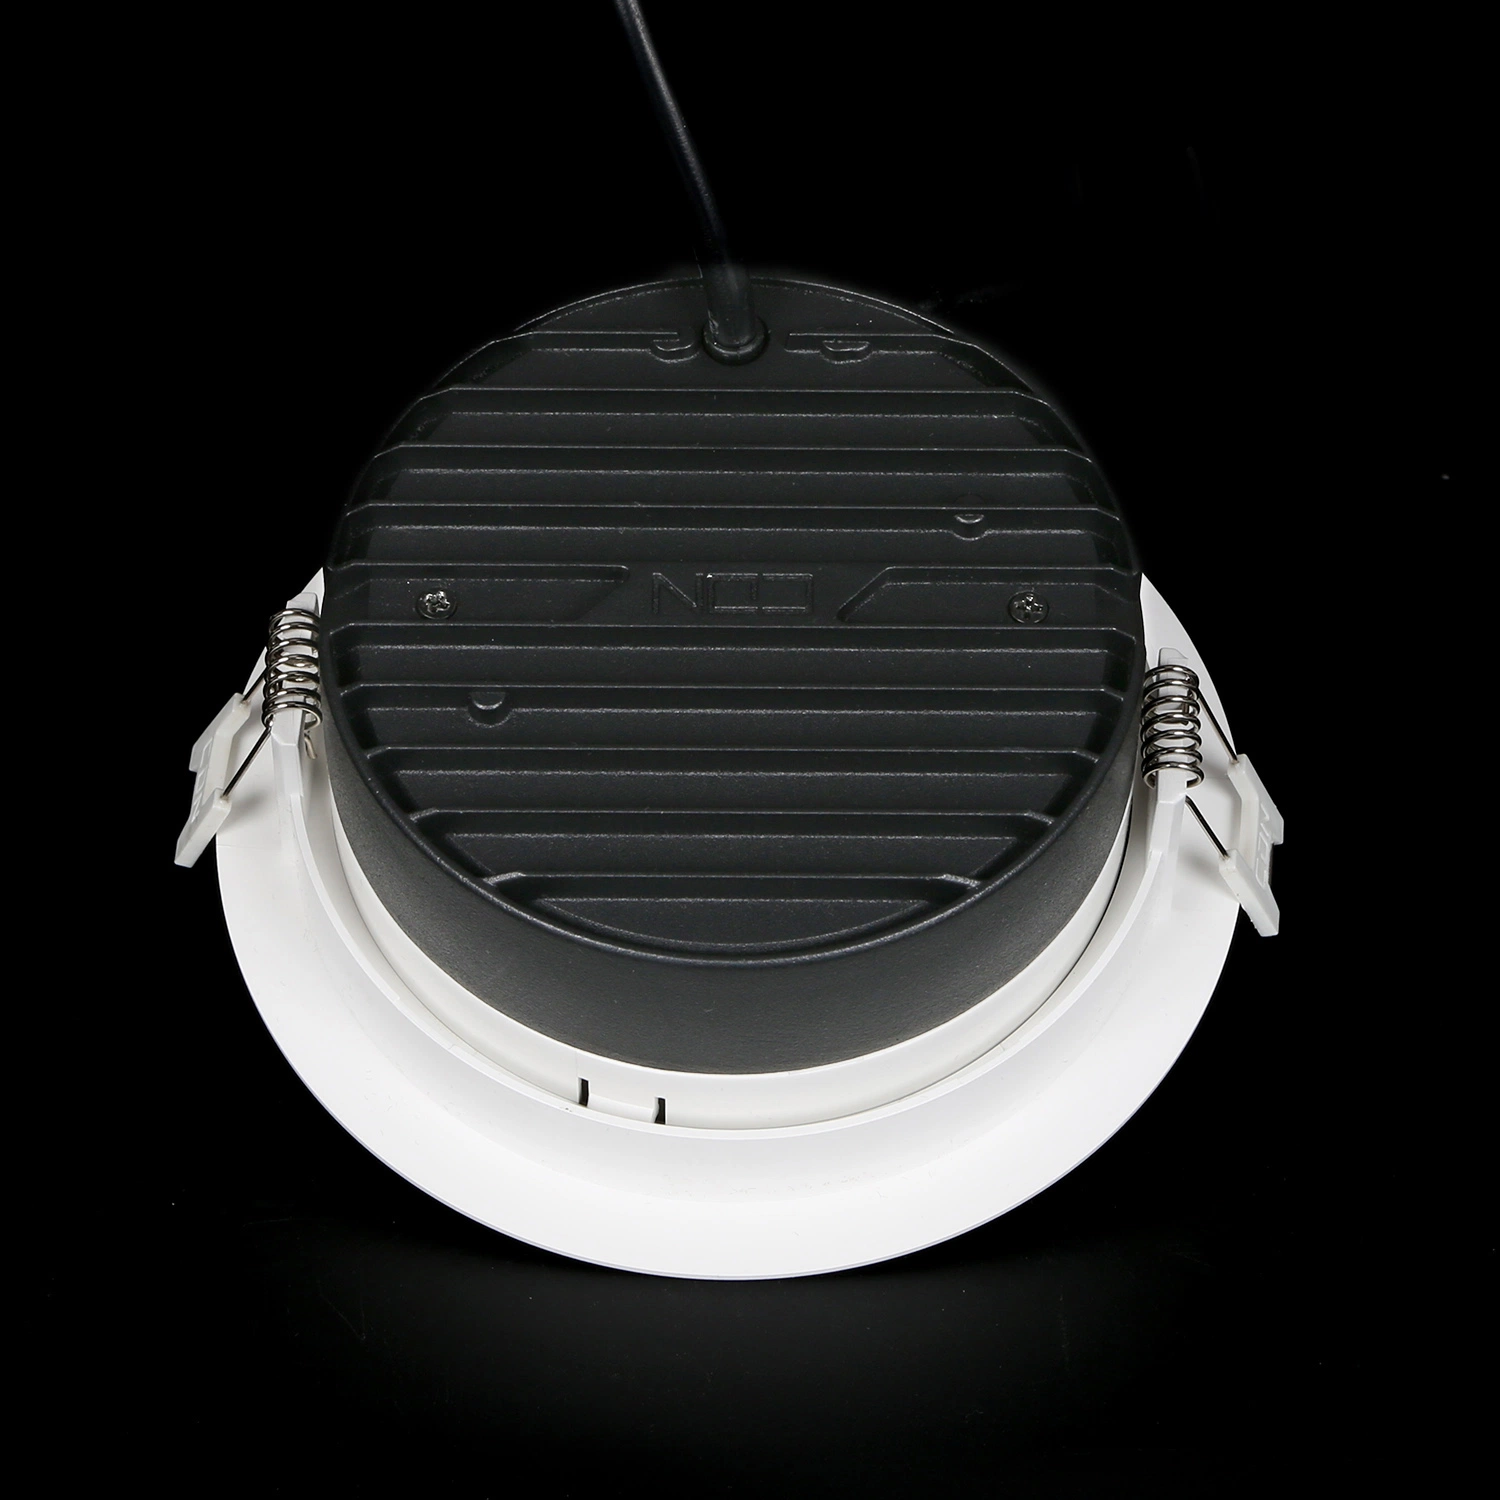 CE الجملة الكمبيوتر الثابت حلية الألومنيوم هيكل الألومنيوم الحلو الجودة التجارية مصباح LED منخفض منخفض منخفض للسقف Ra90